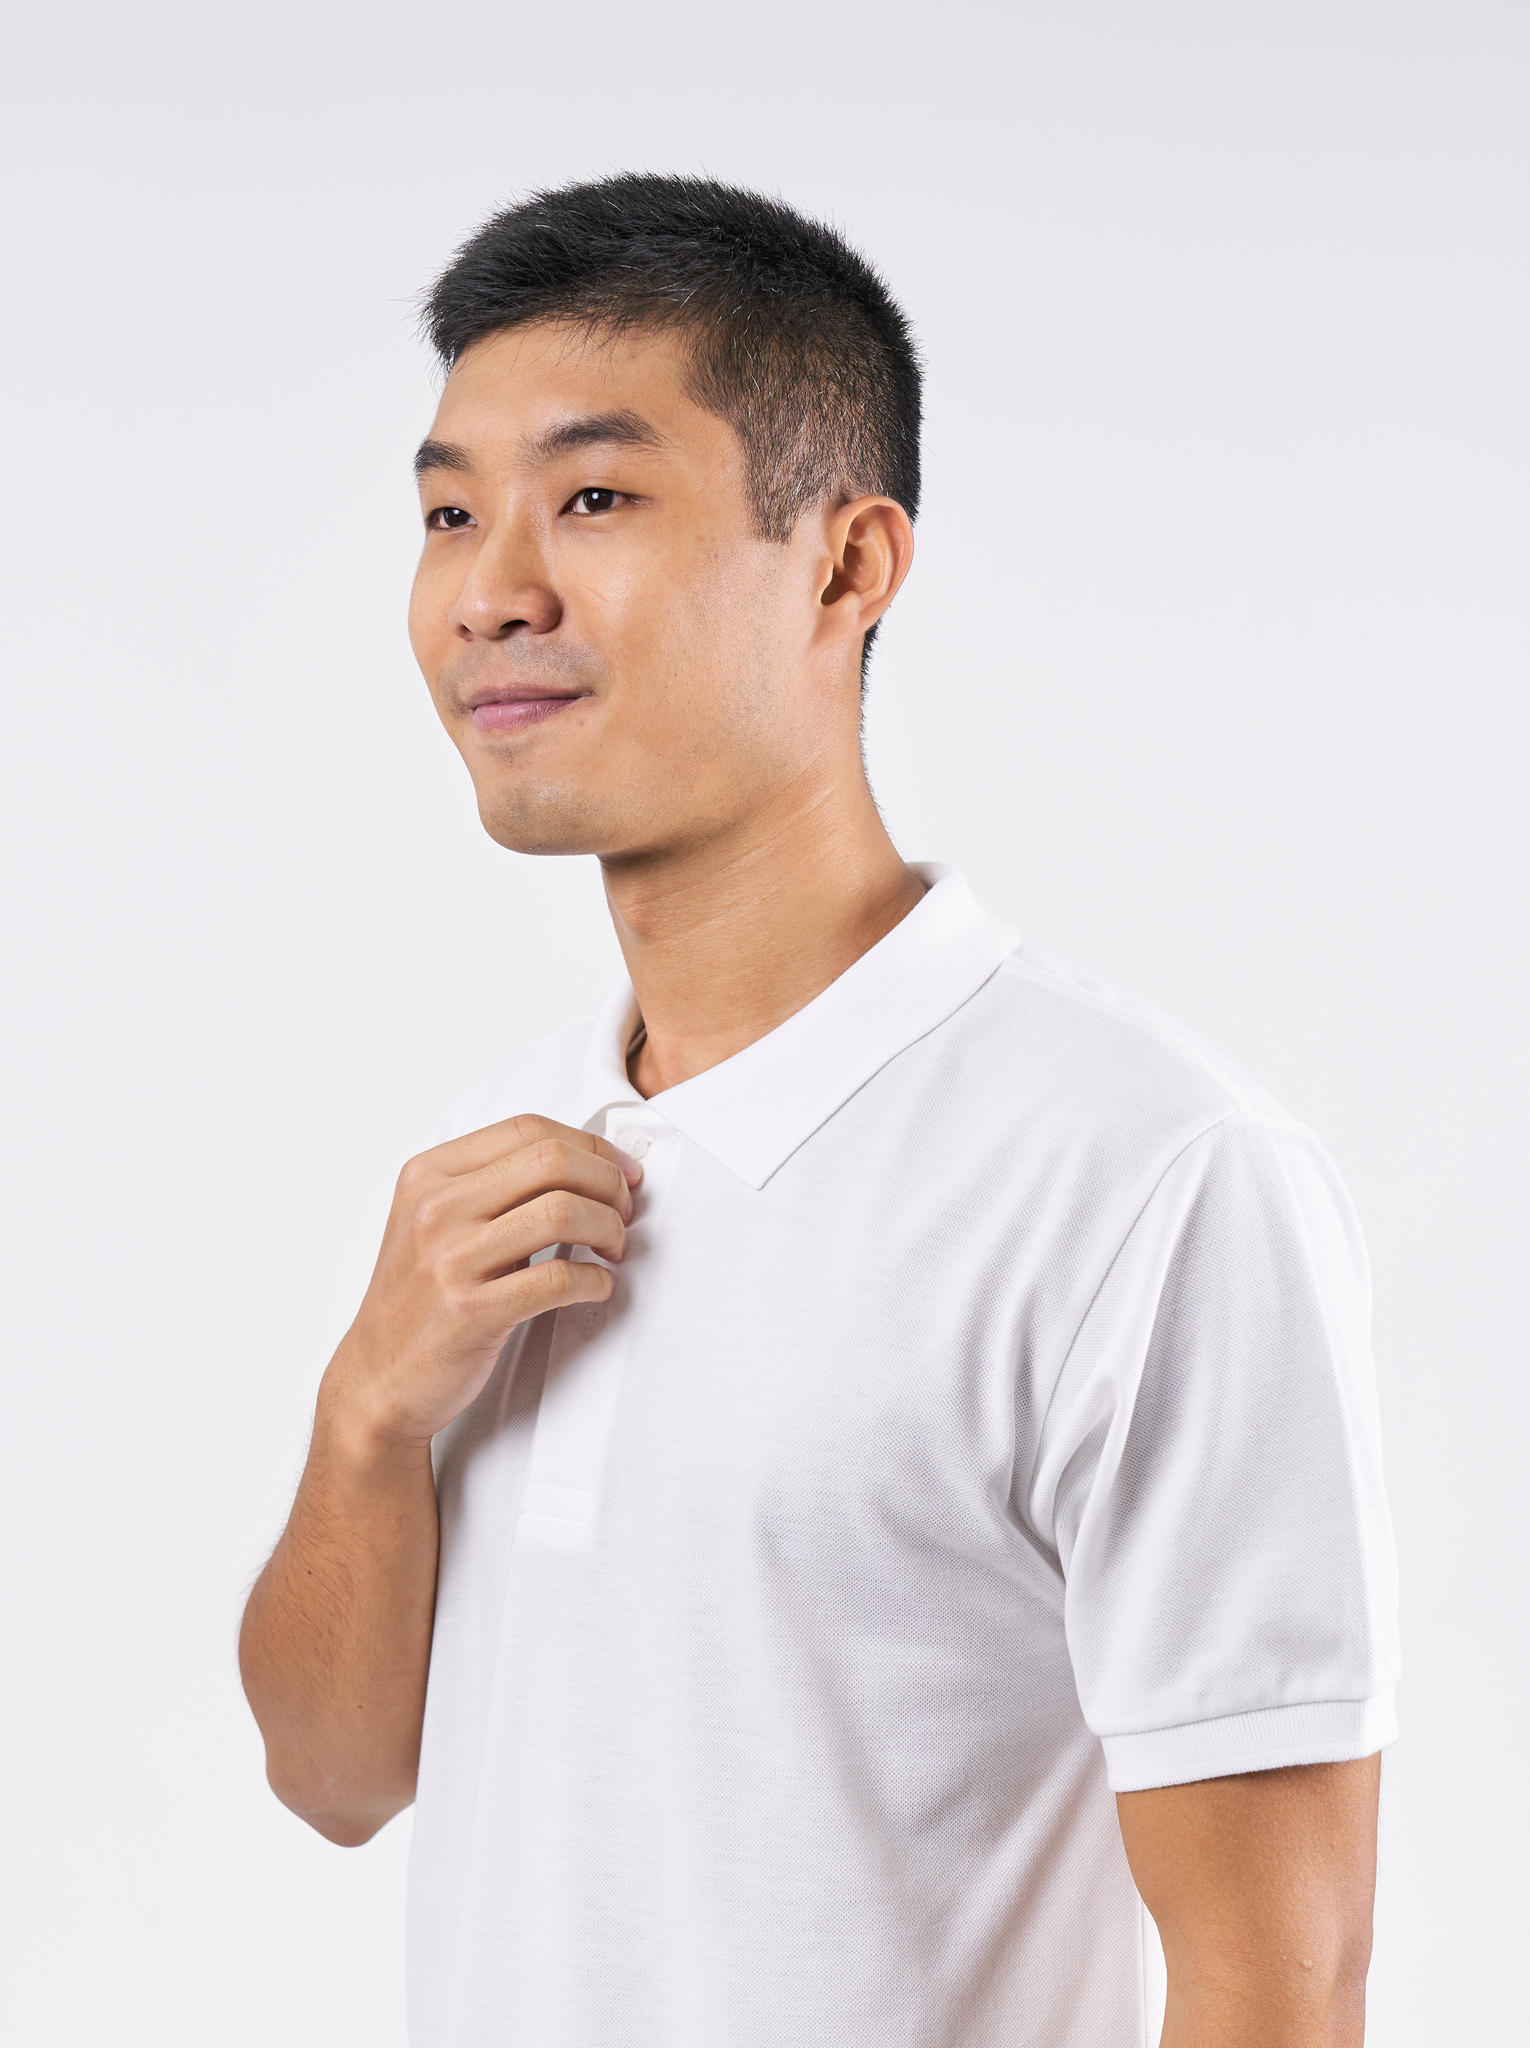 Polo Shirt เสื้อโปโล (White, สีขาว)(Unisex)